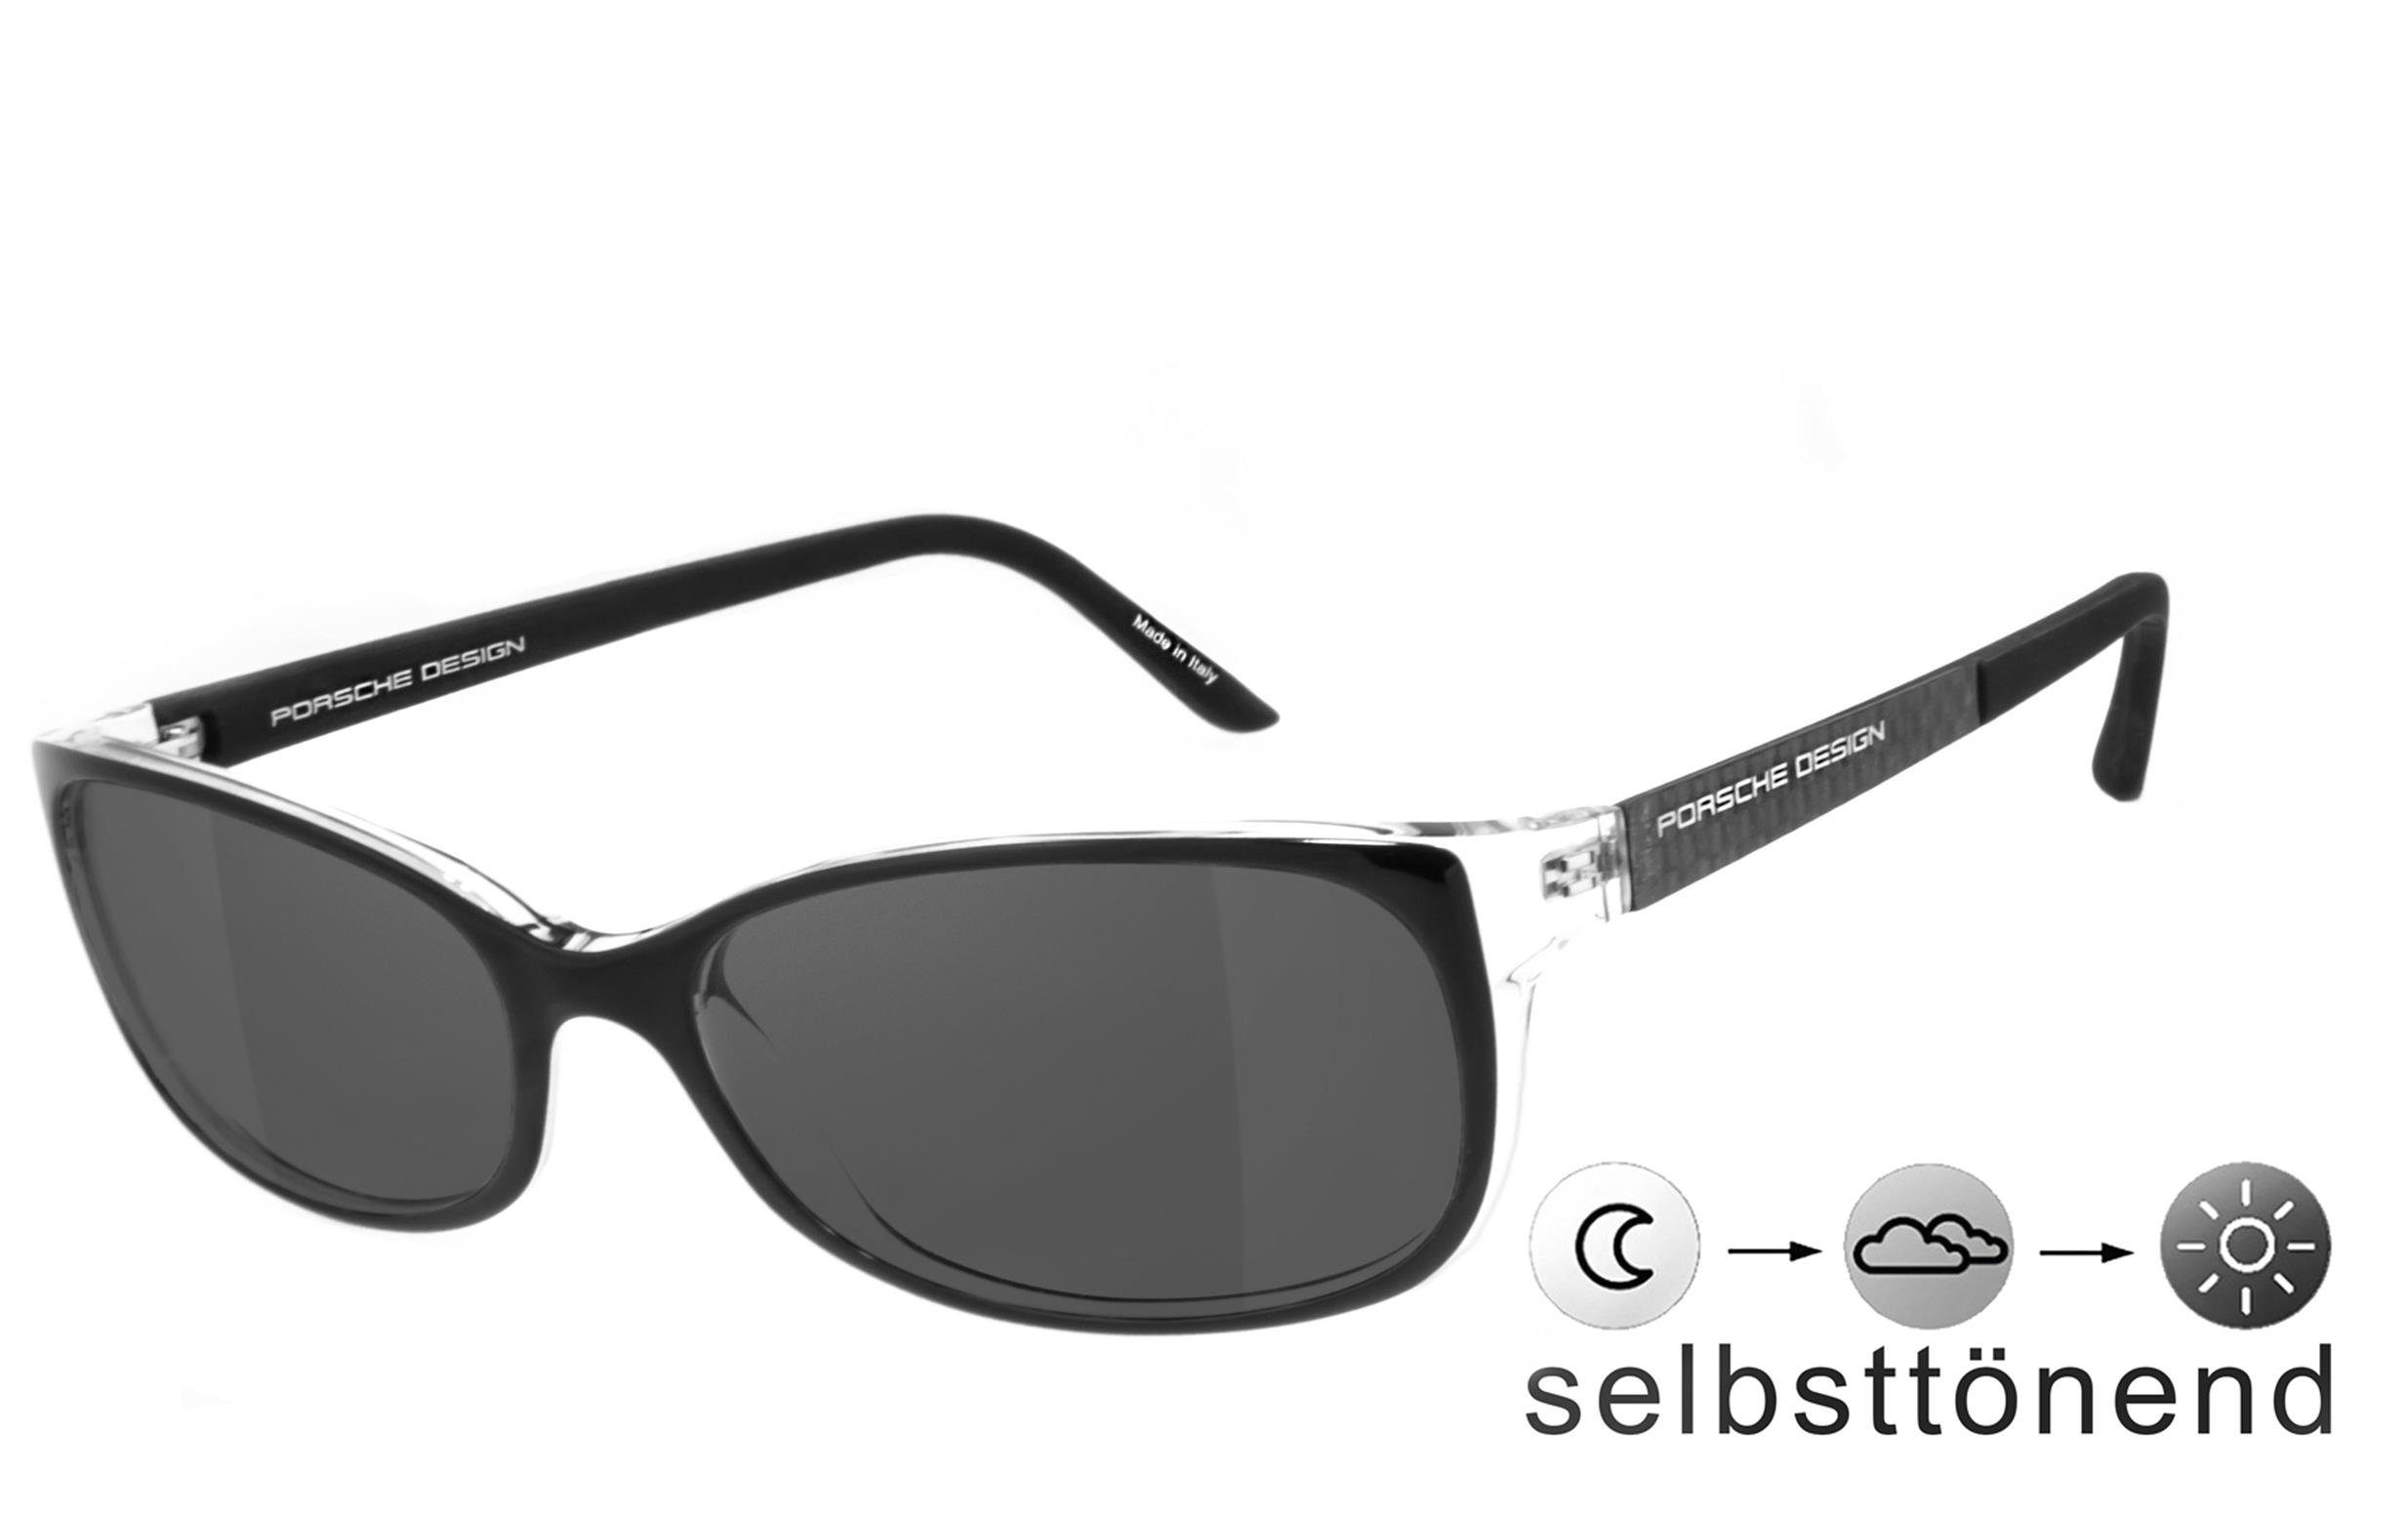 PORSCHE Design Sonnenbrille P8247 A-as selbsttönende HLT® Qualitätsgläser